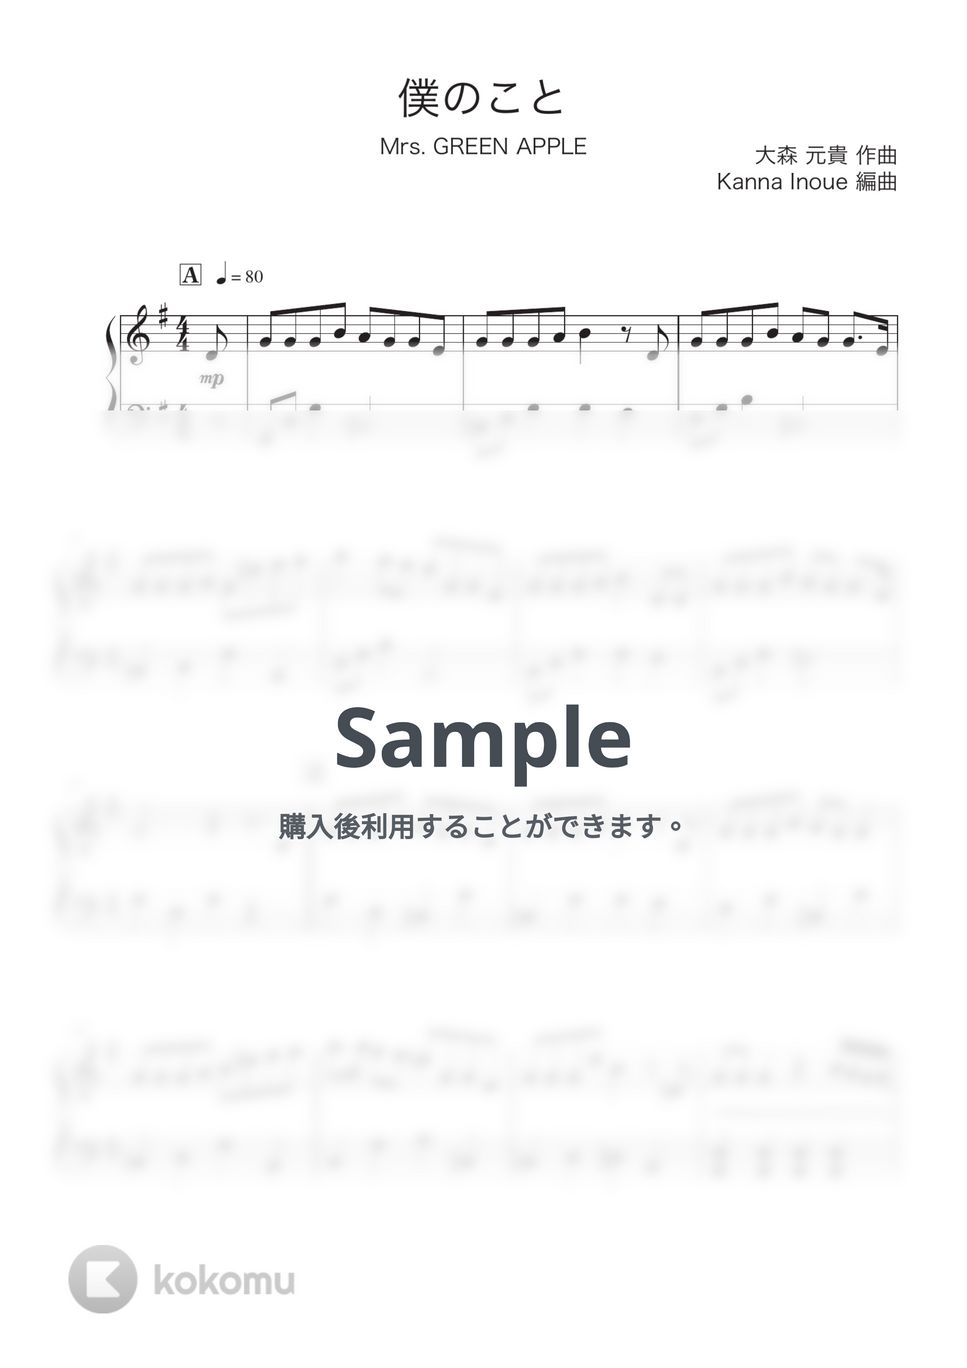 Mrs. GREEN APPLE - 僕のこと (ピアノソロ / 初級) by Kanna Inoue